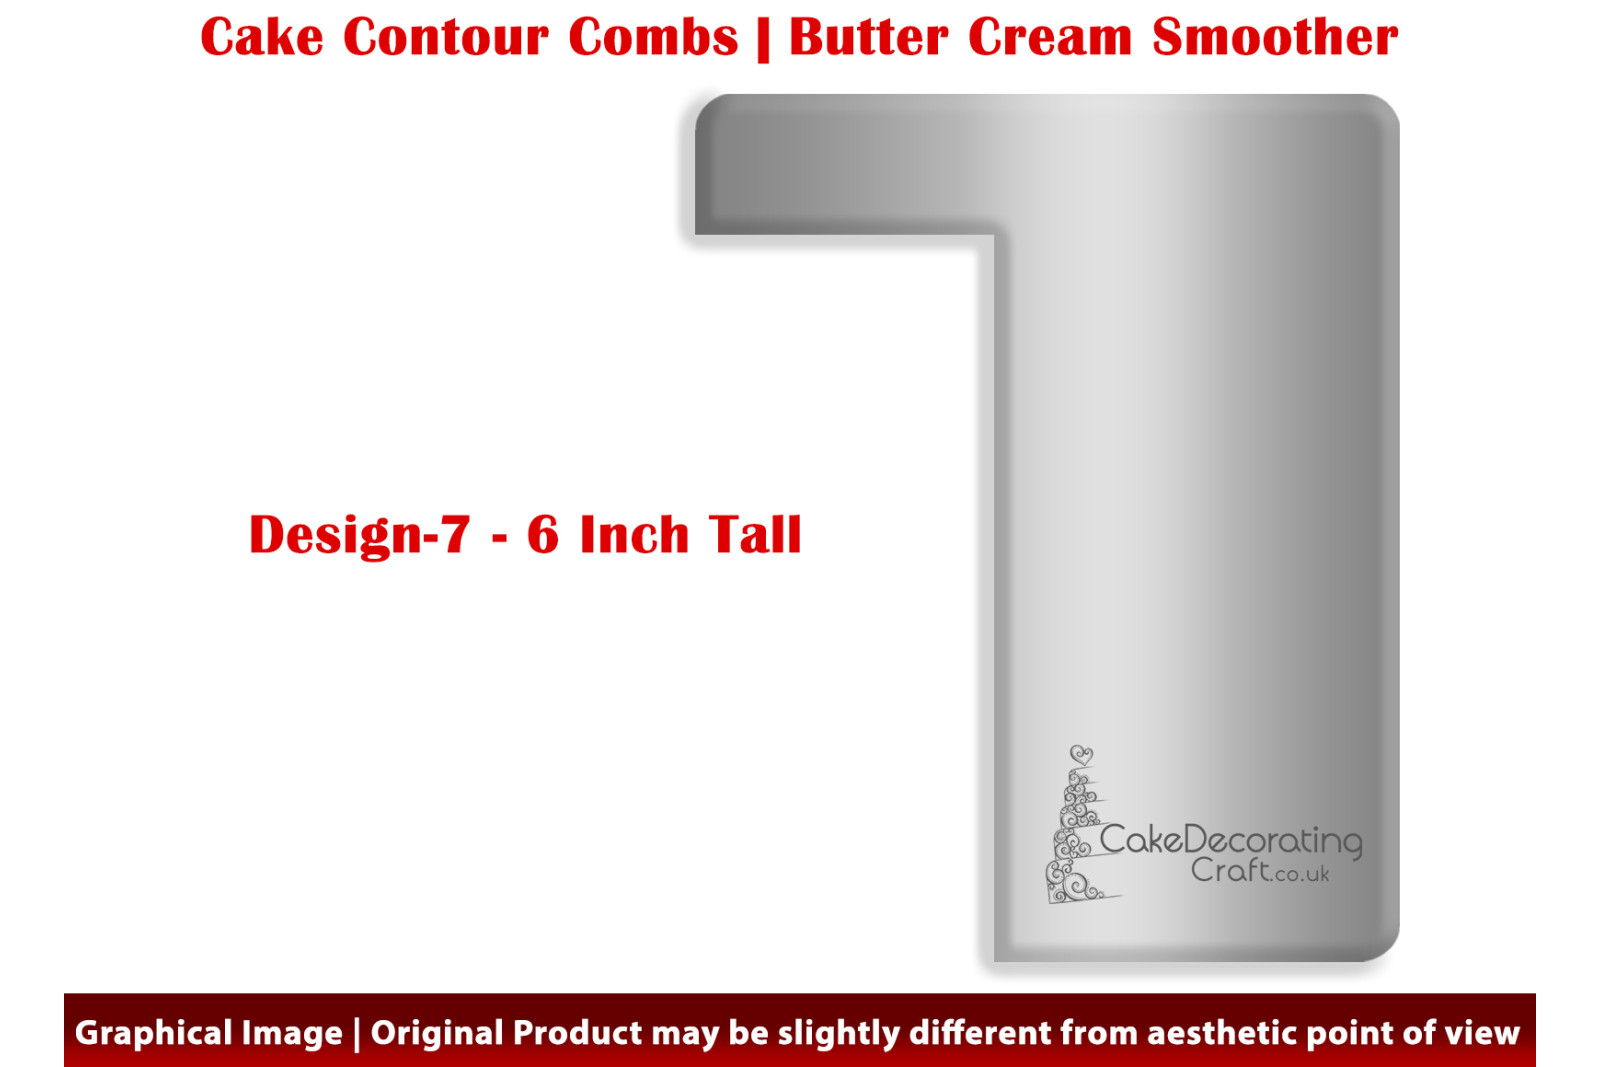 Crisp Corner | 6 Inch | Cake Decorating Craft | Cake Contour Combs | Smoothing | Metal Spreader | Butter Cream Smoothing | Genius Tool